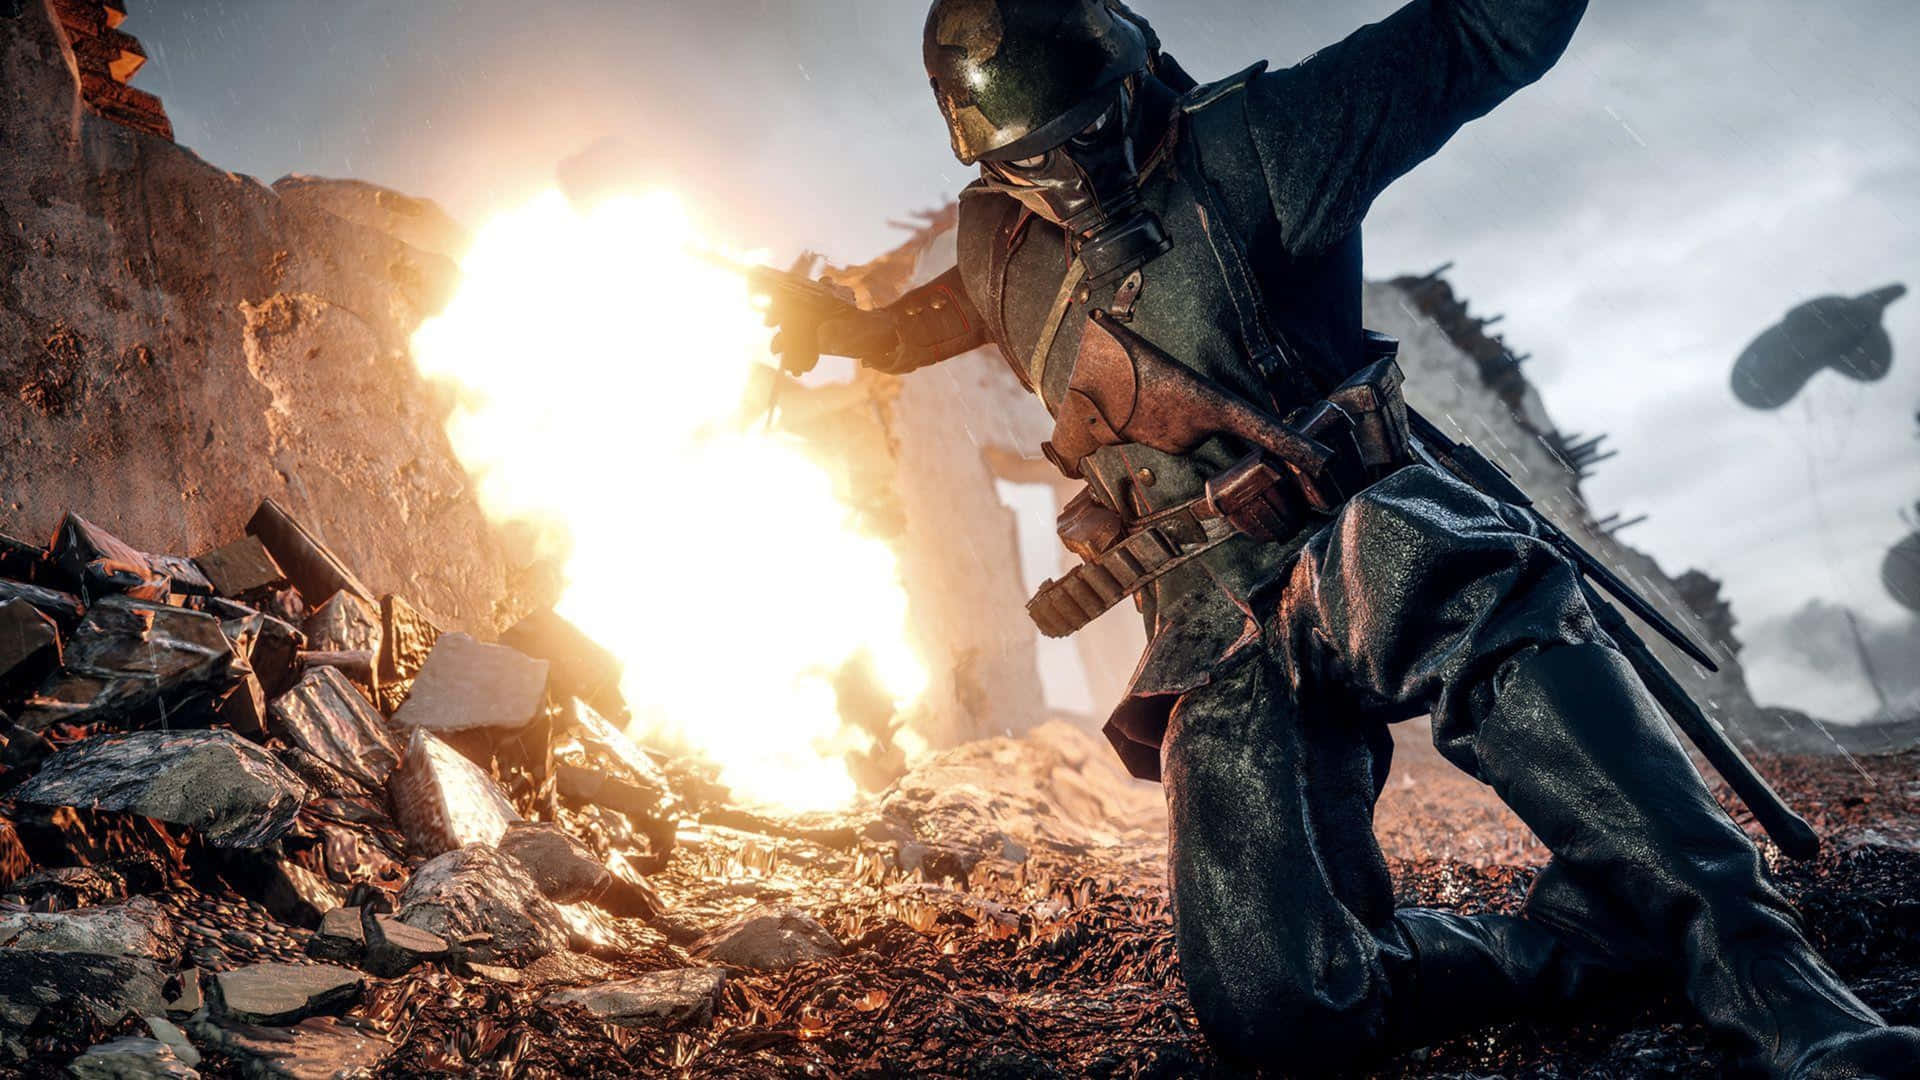 1440p Battlefield 1 Jump Explosion Background